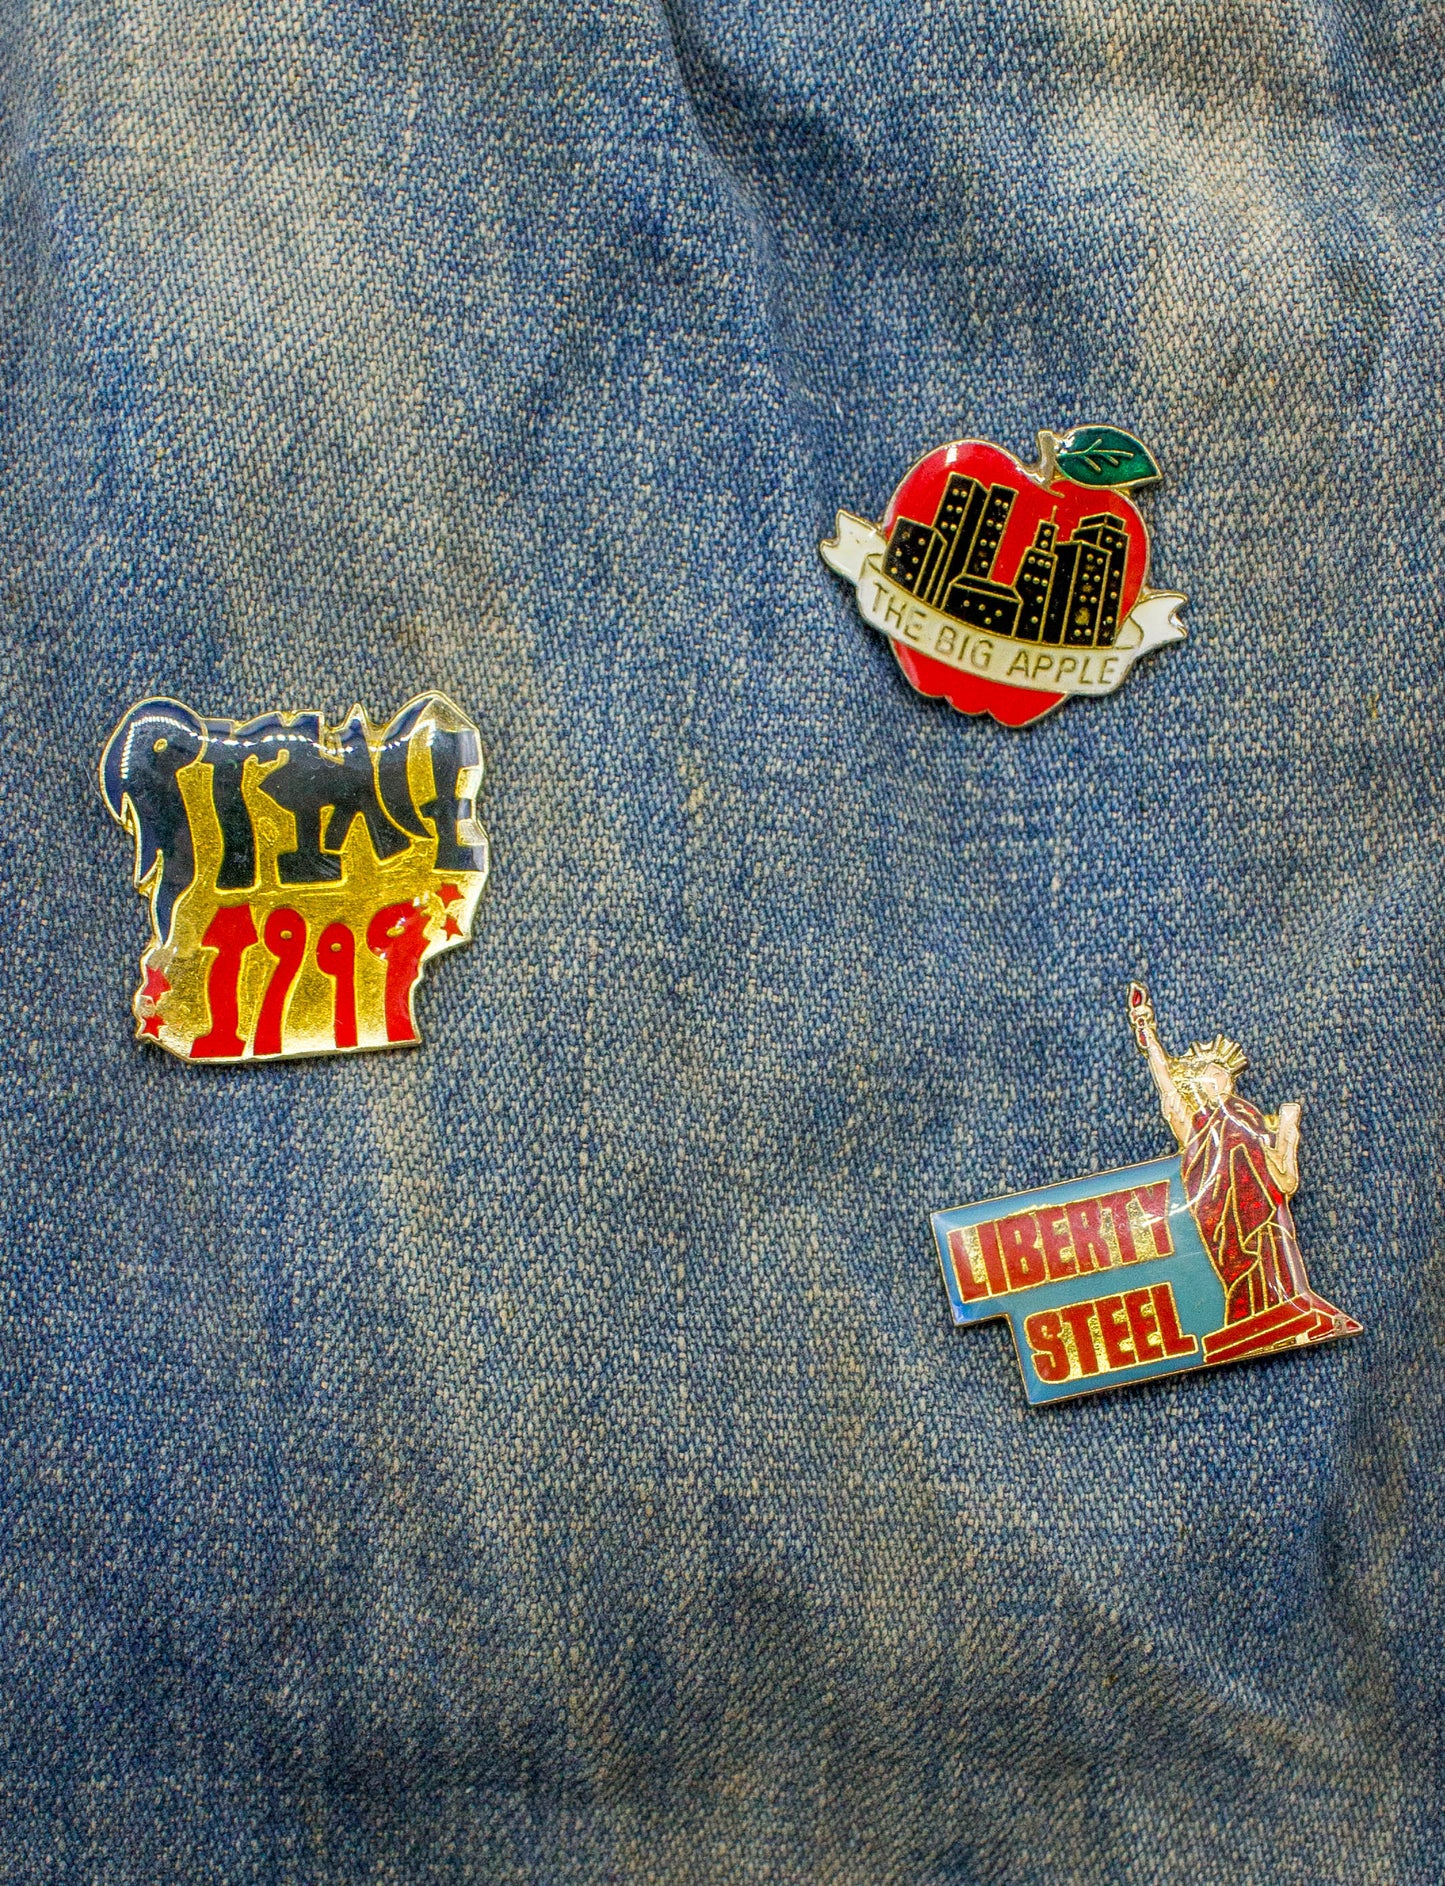 Vintage 80s Colorful Enamel Pins Prince 1999/The Big Apple/Liberty Steel